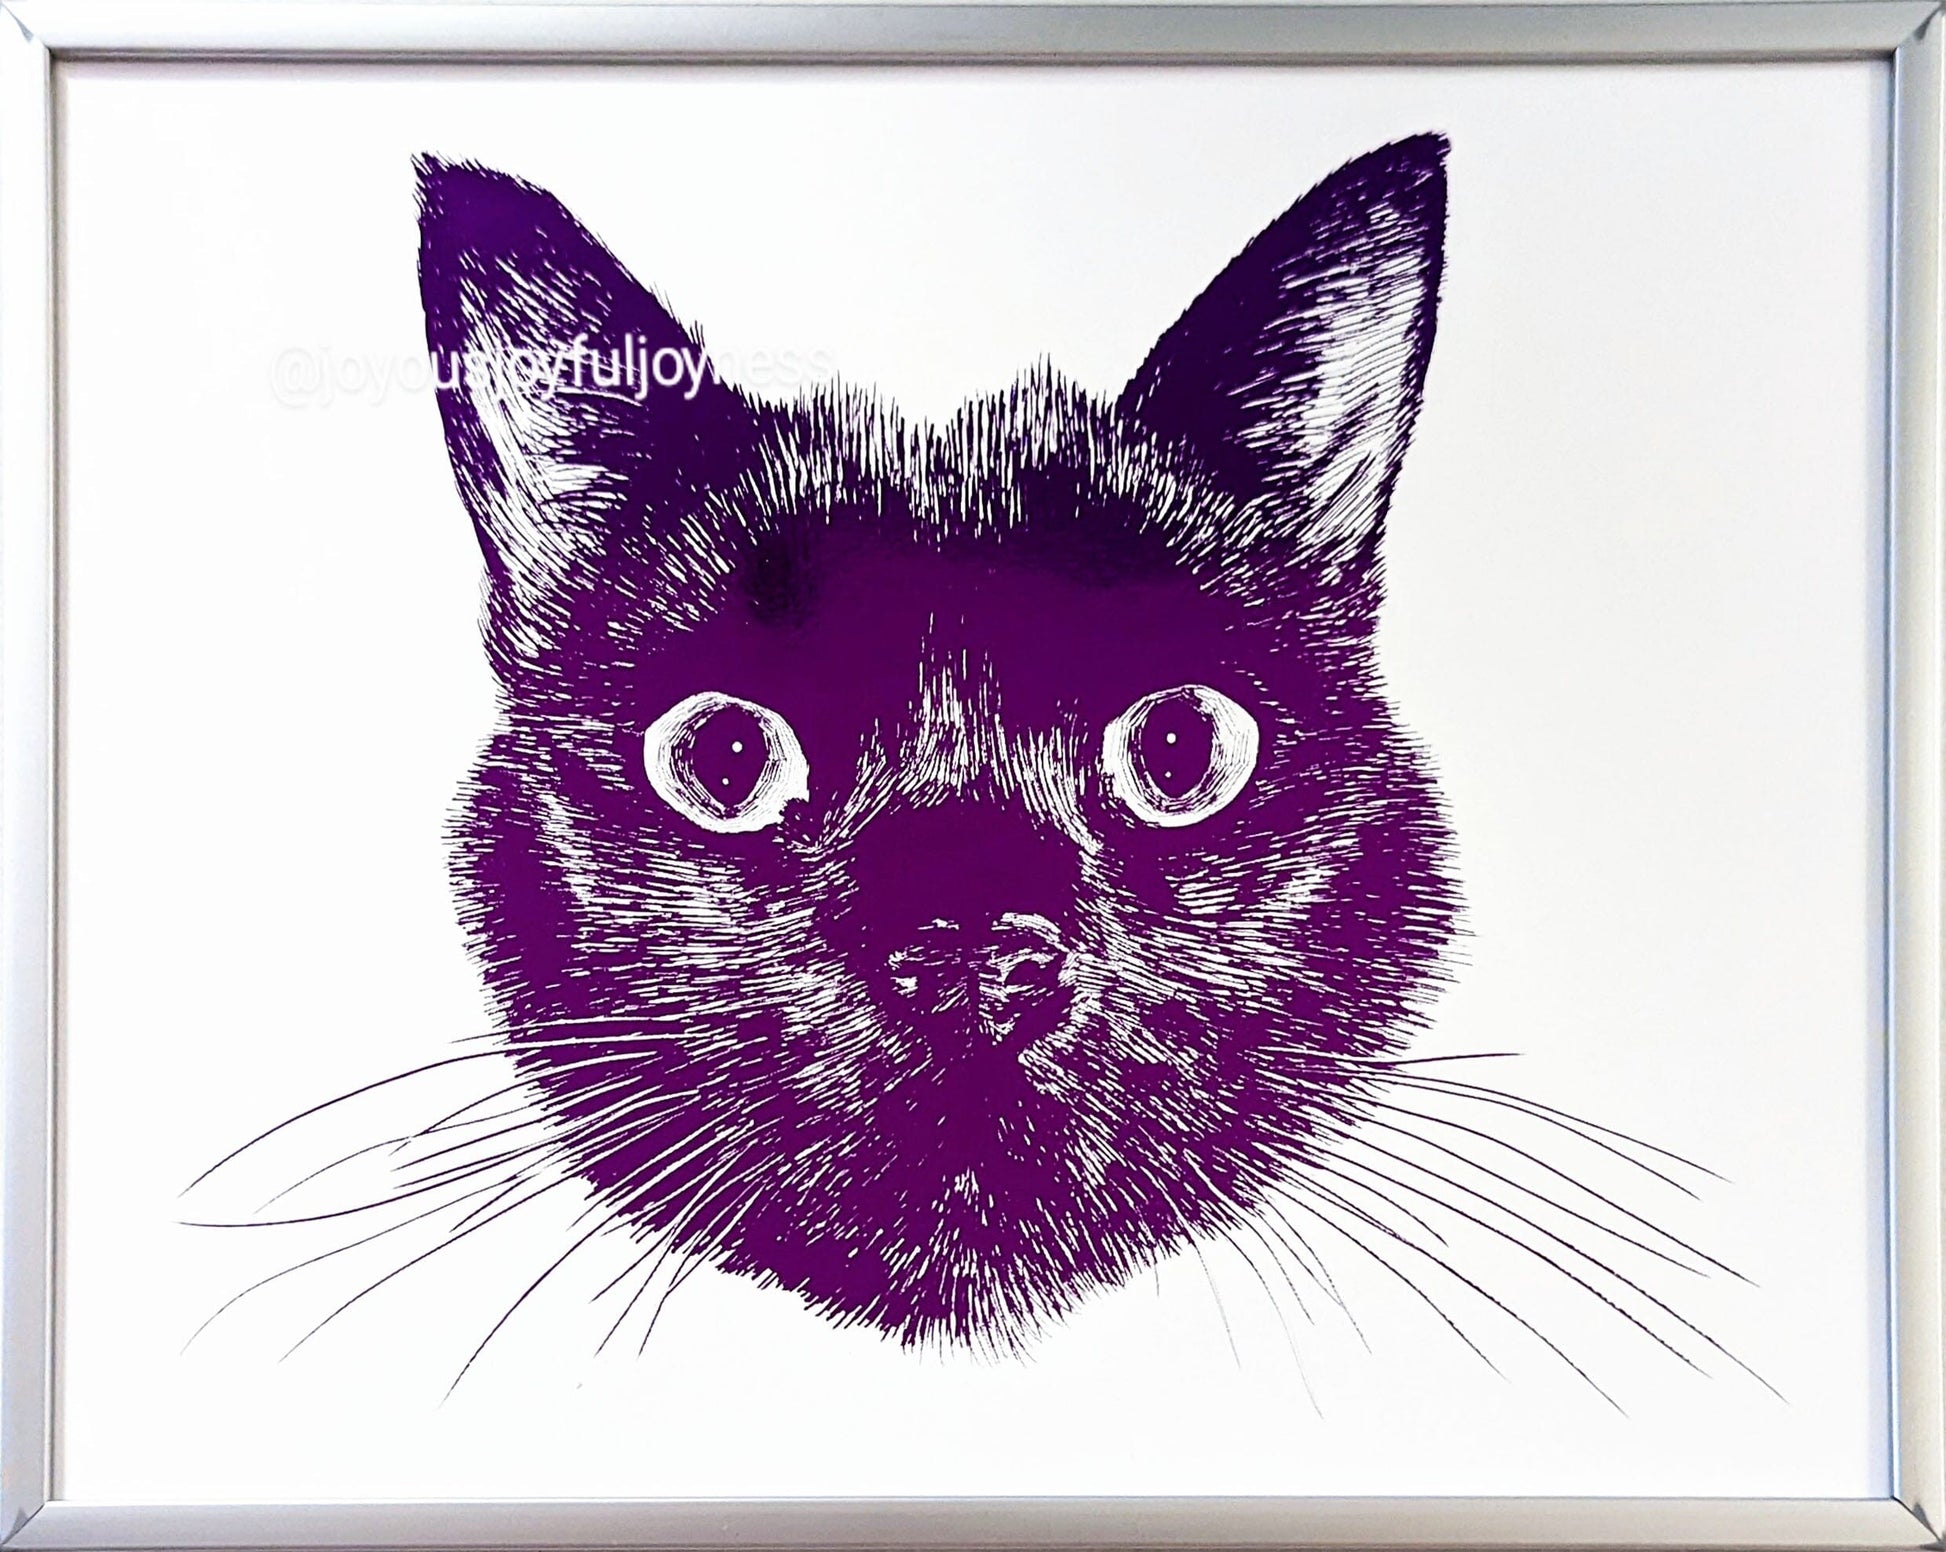 Custom Portrait Of Cats Posters, Prints, & Visual Artwork JoyousJoyfulJoyness 